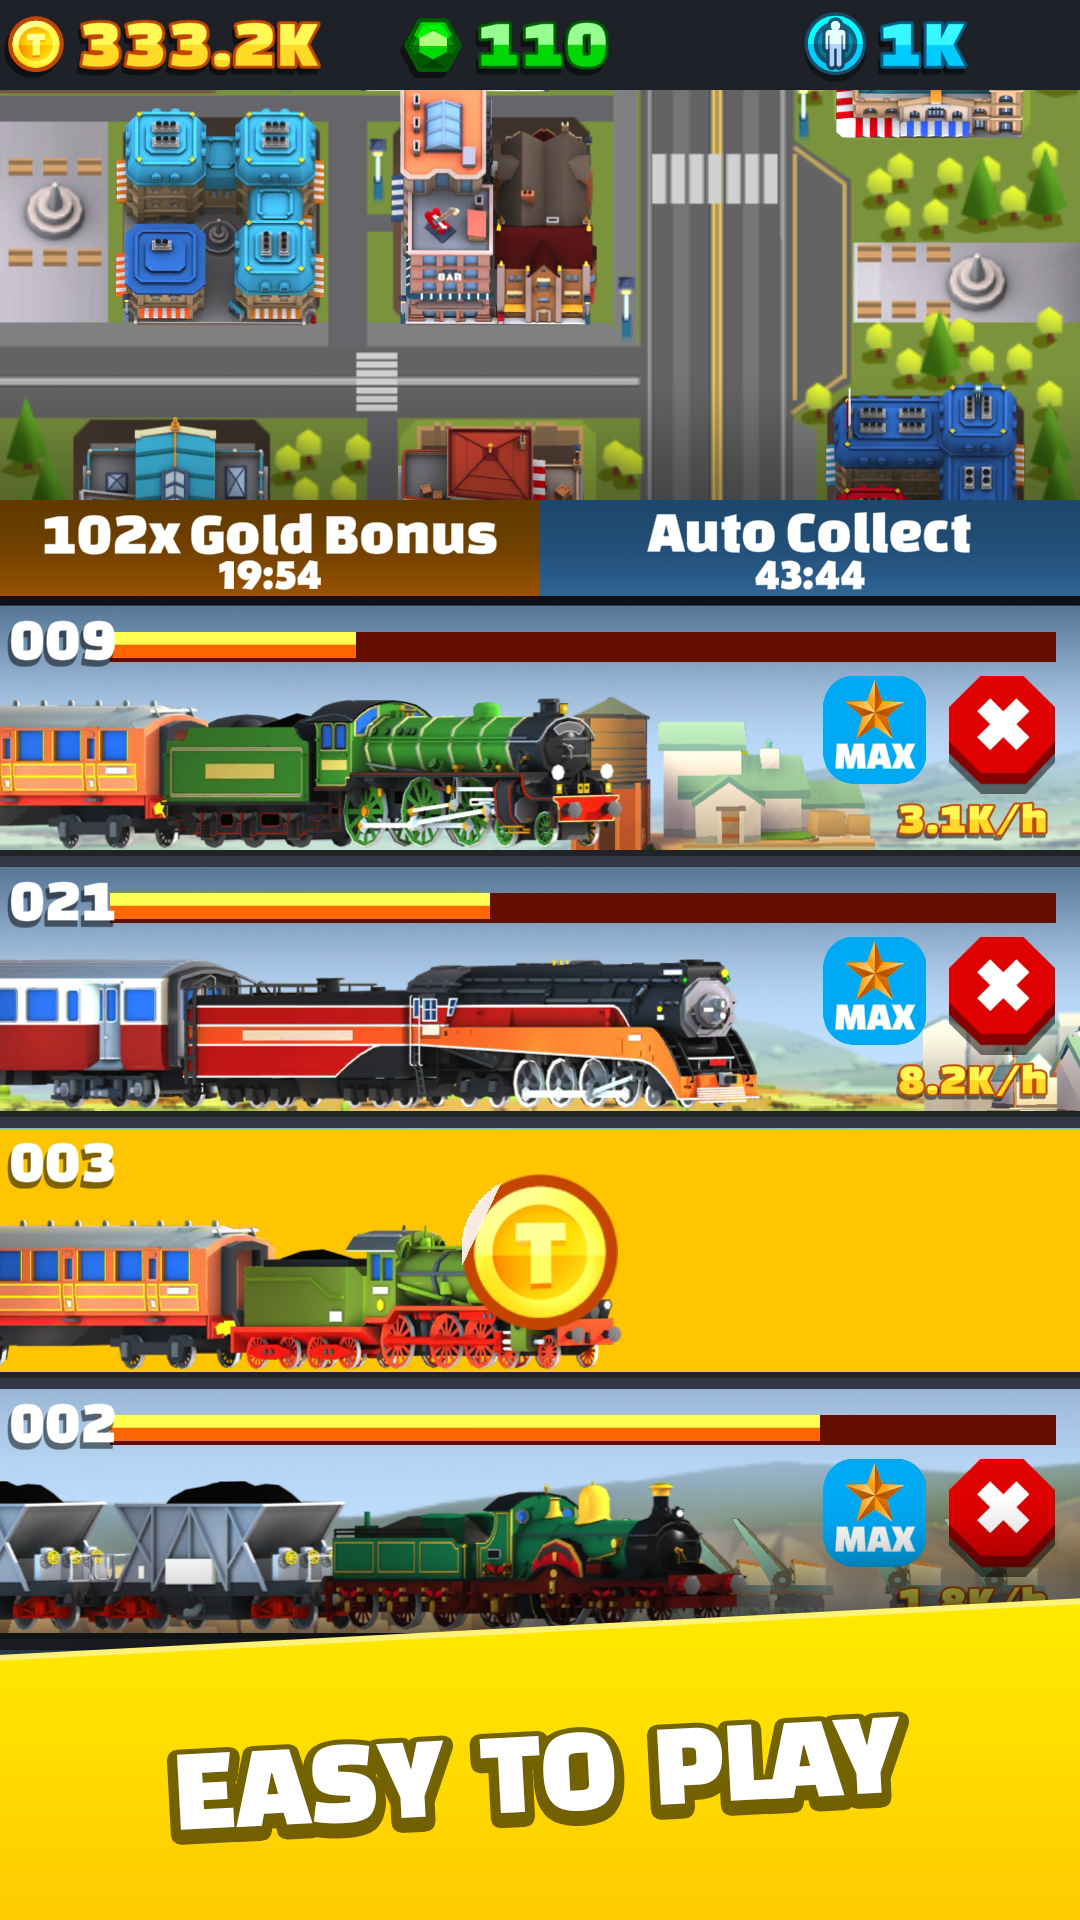 Screenshot of Train Collector: Idle Tycoon